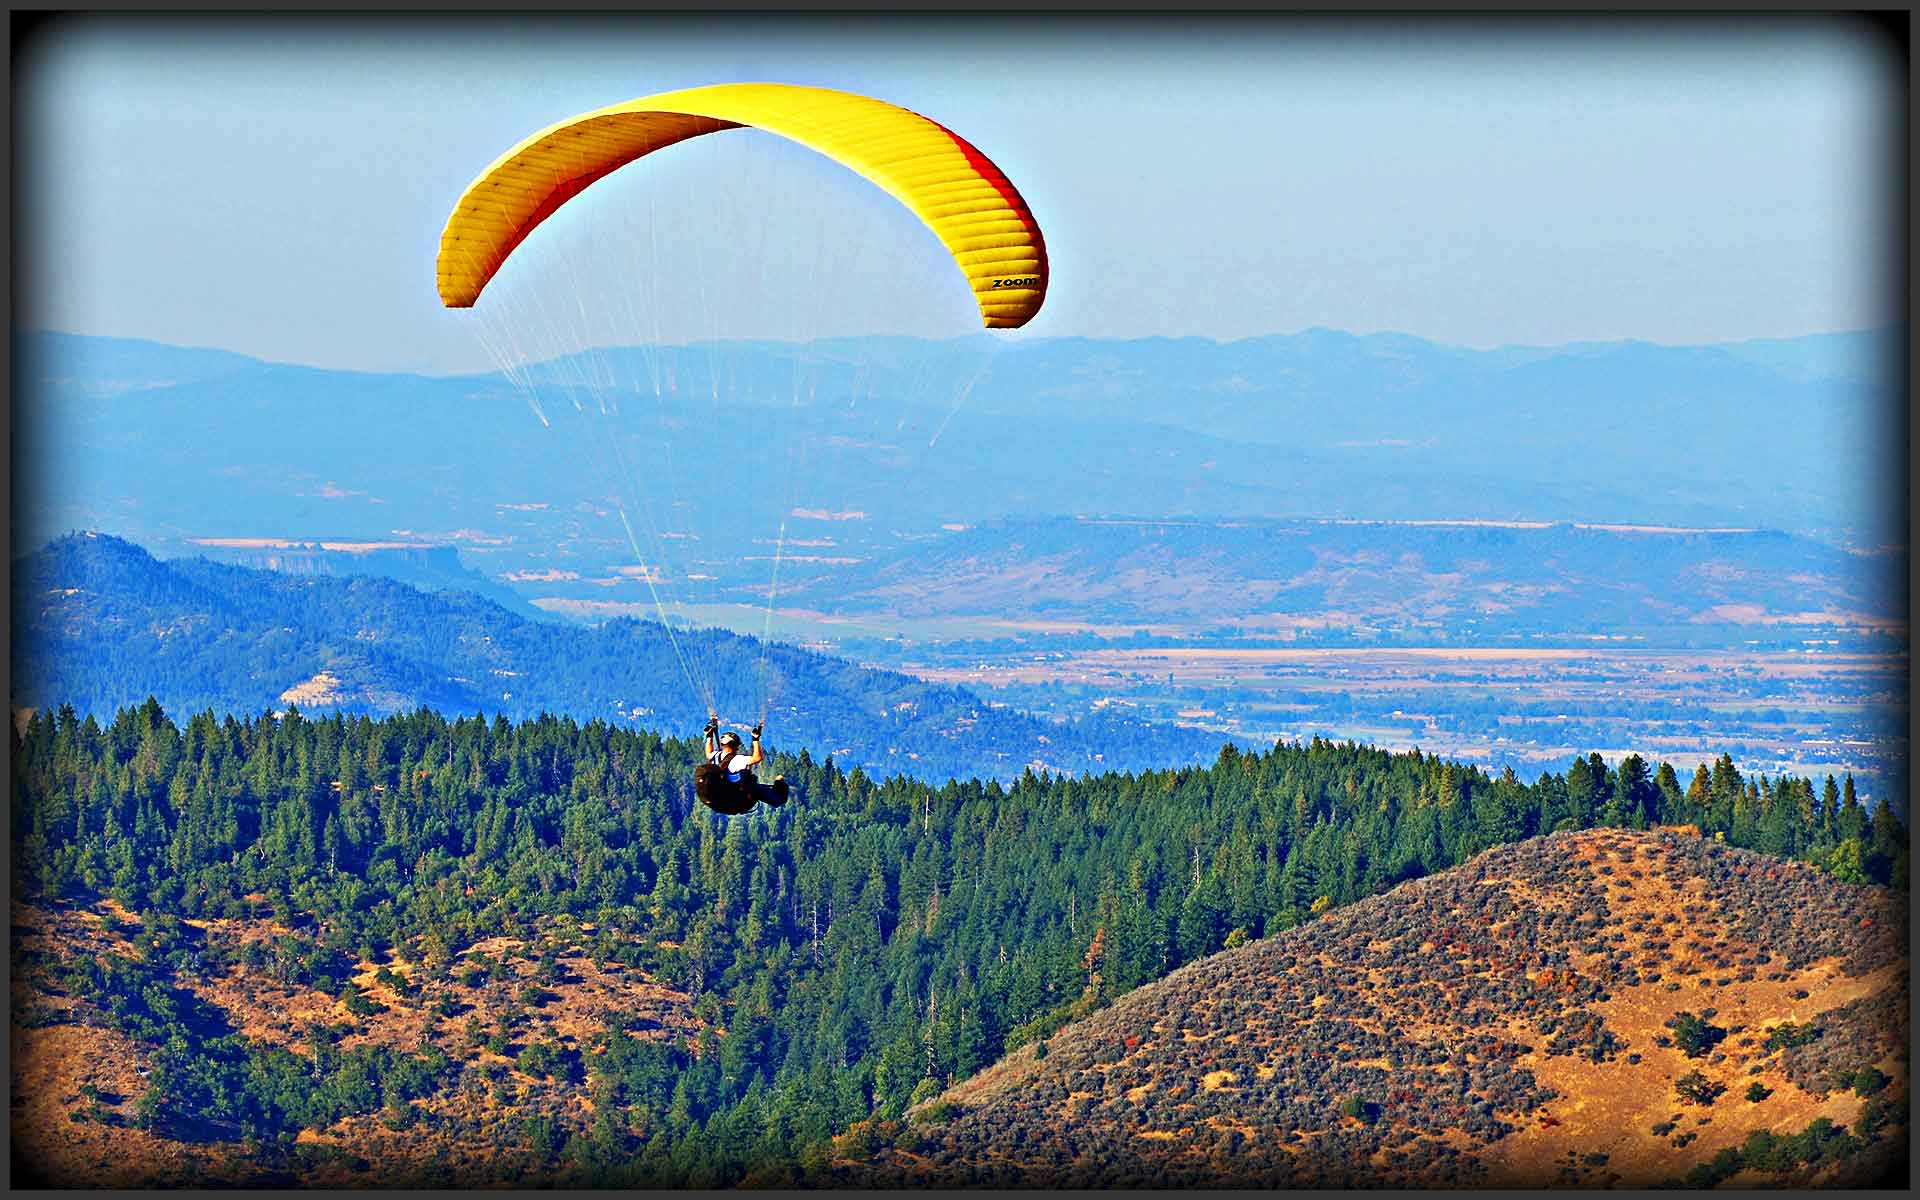 Hang Gliding Pilot over Rogue Valley